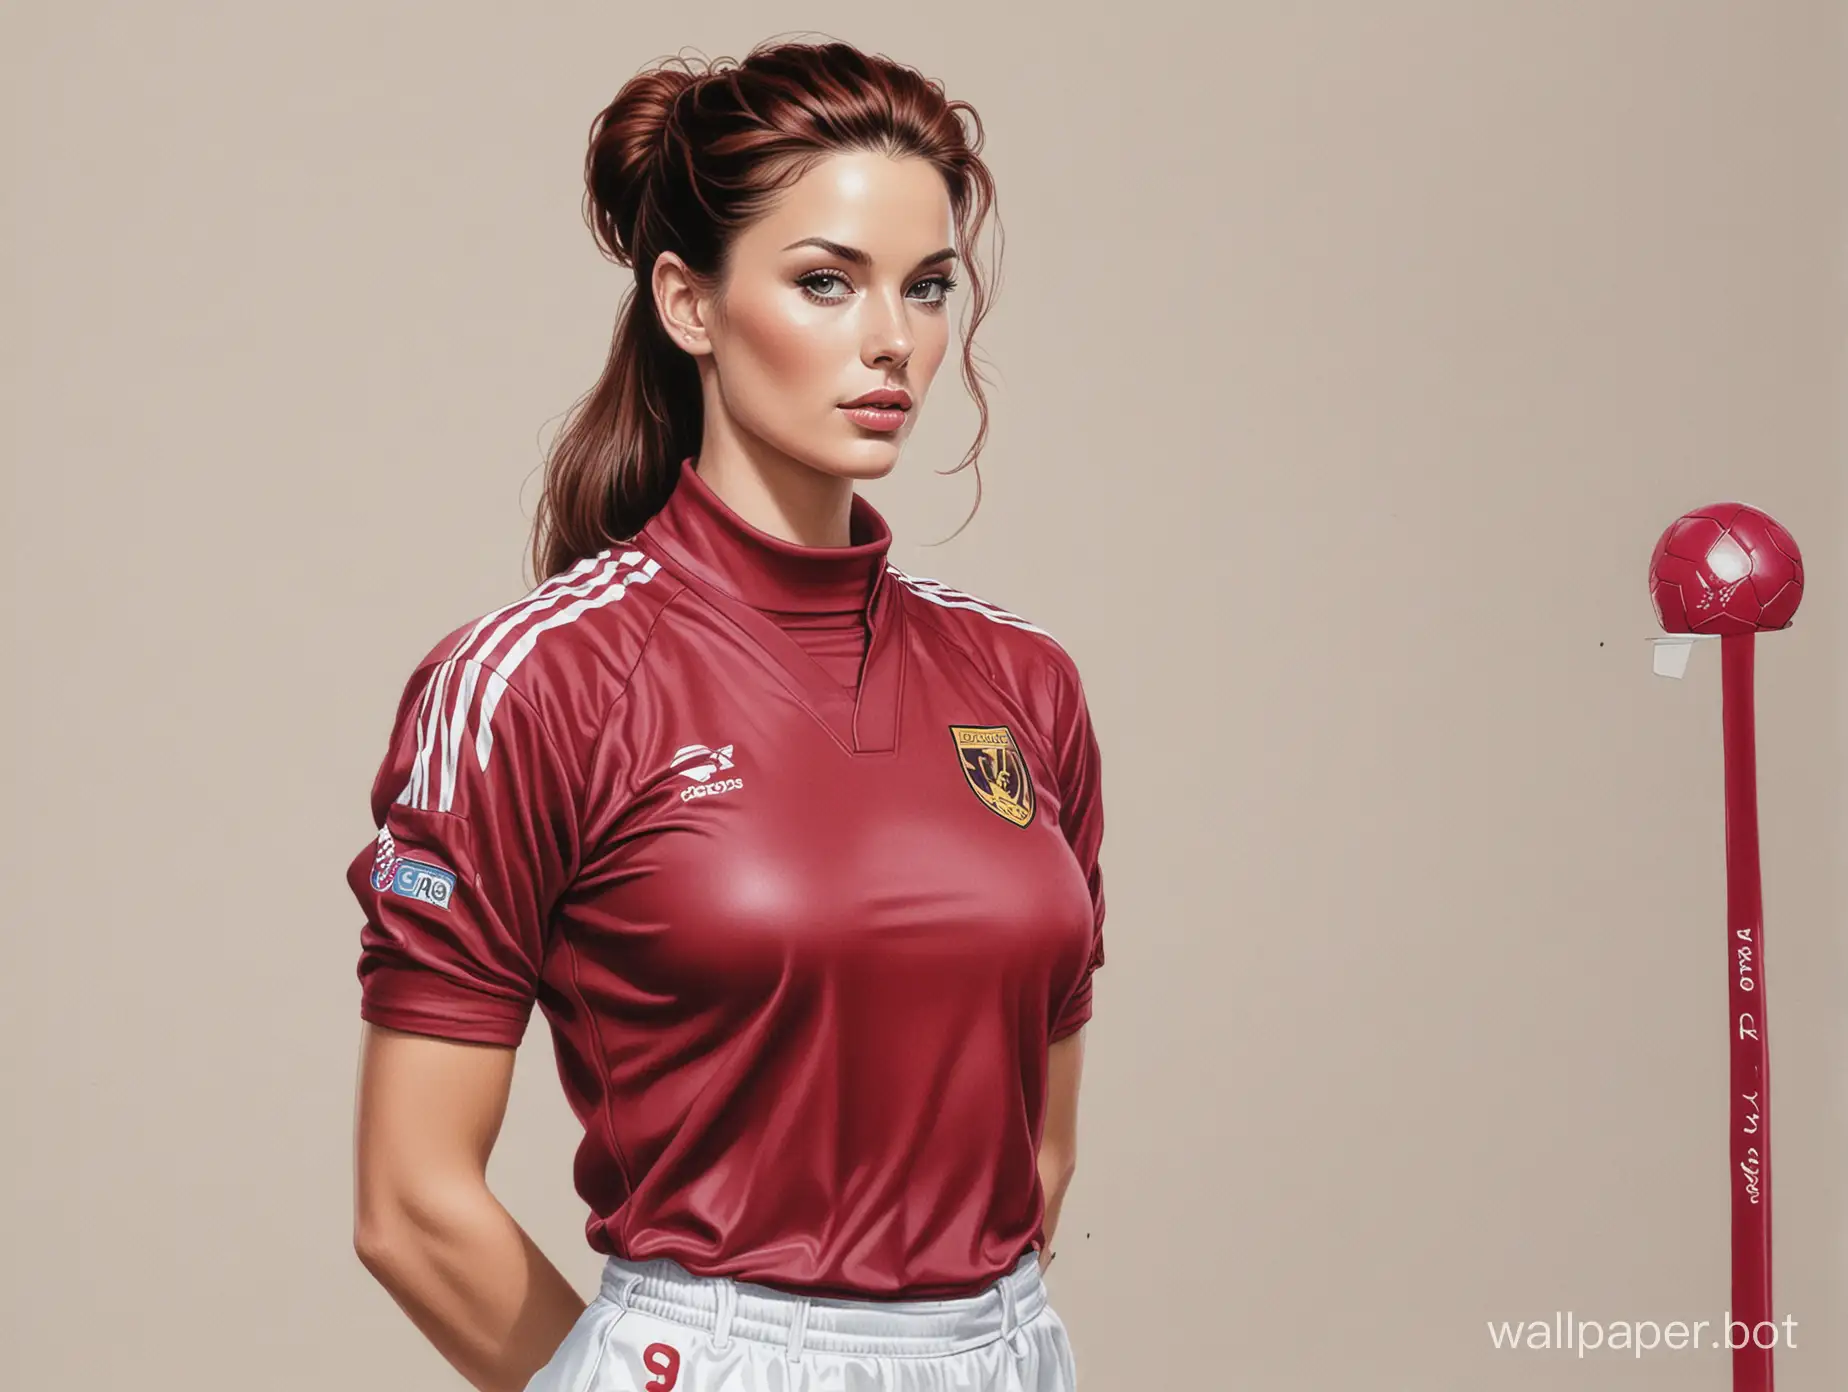 Victoria-Clough-Portrait-Stylish-Soccer-Player-in-BlackBurgundy-Uniform